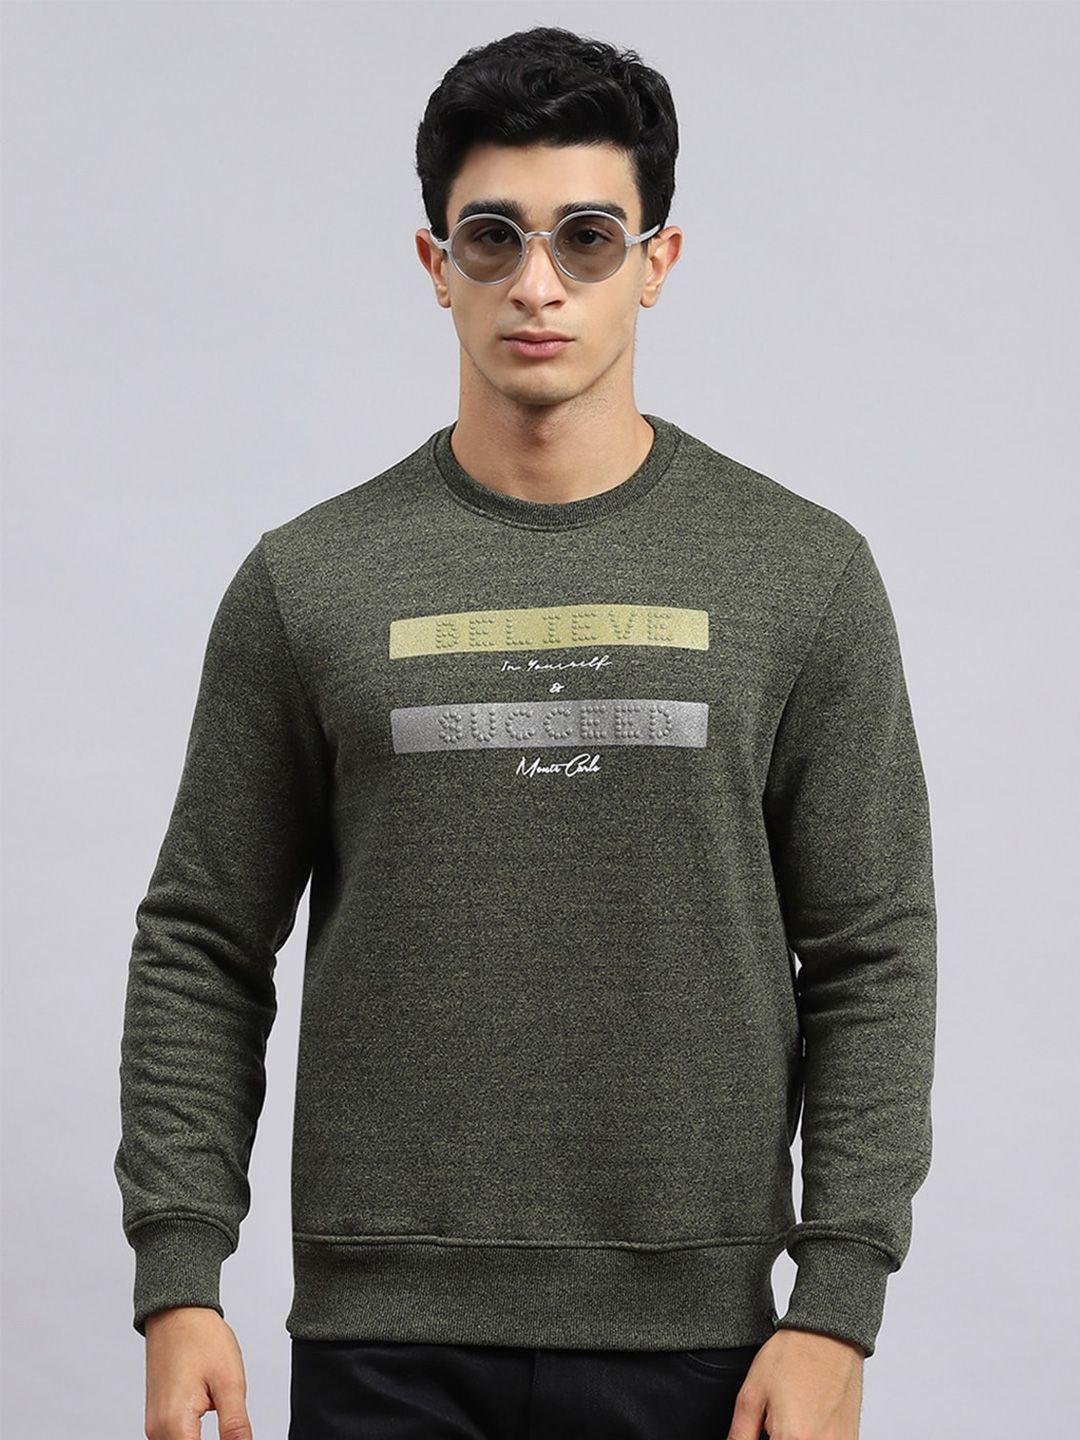 monte-carlo-typography-printed-pullover-sweatshirt